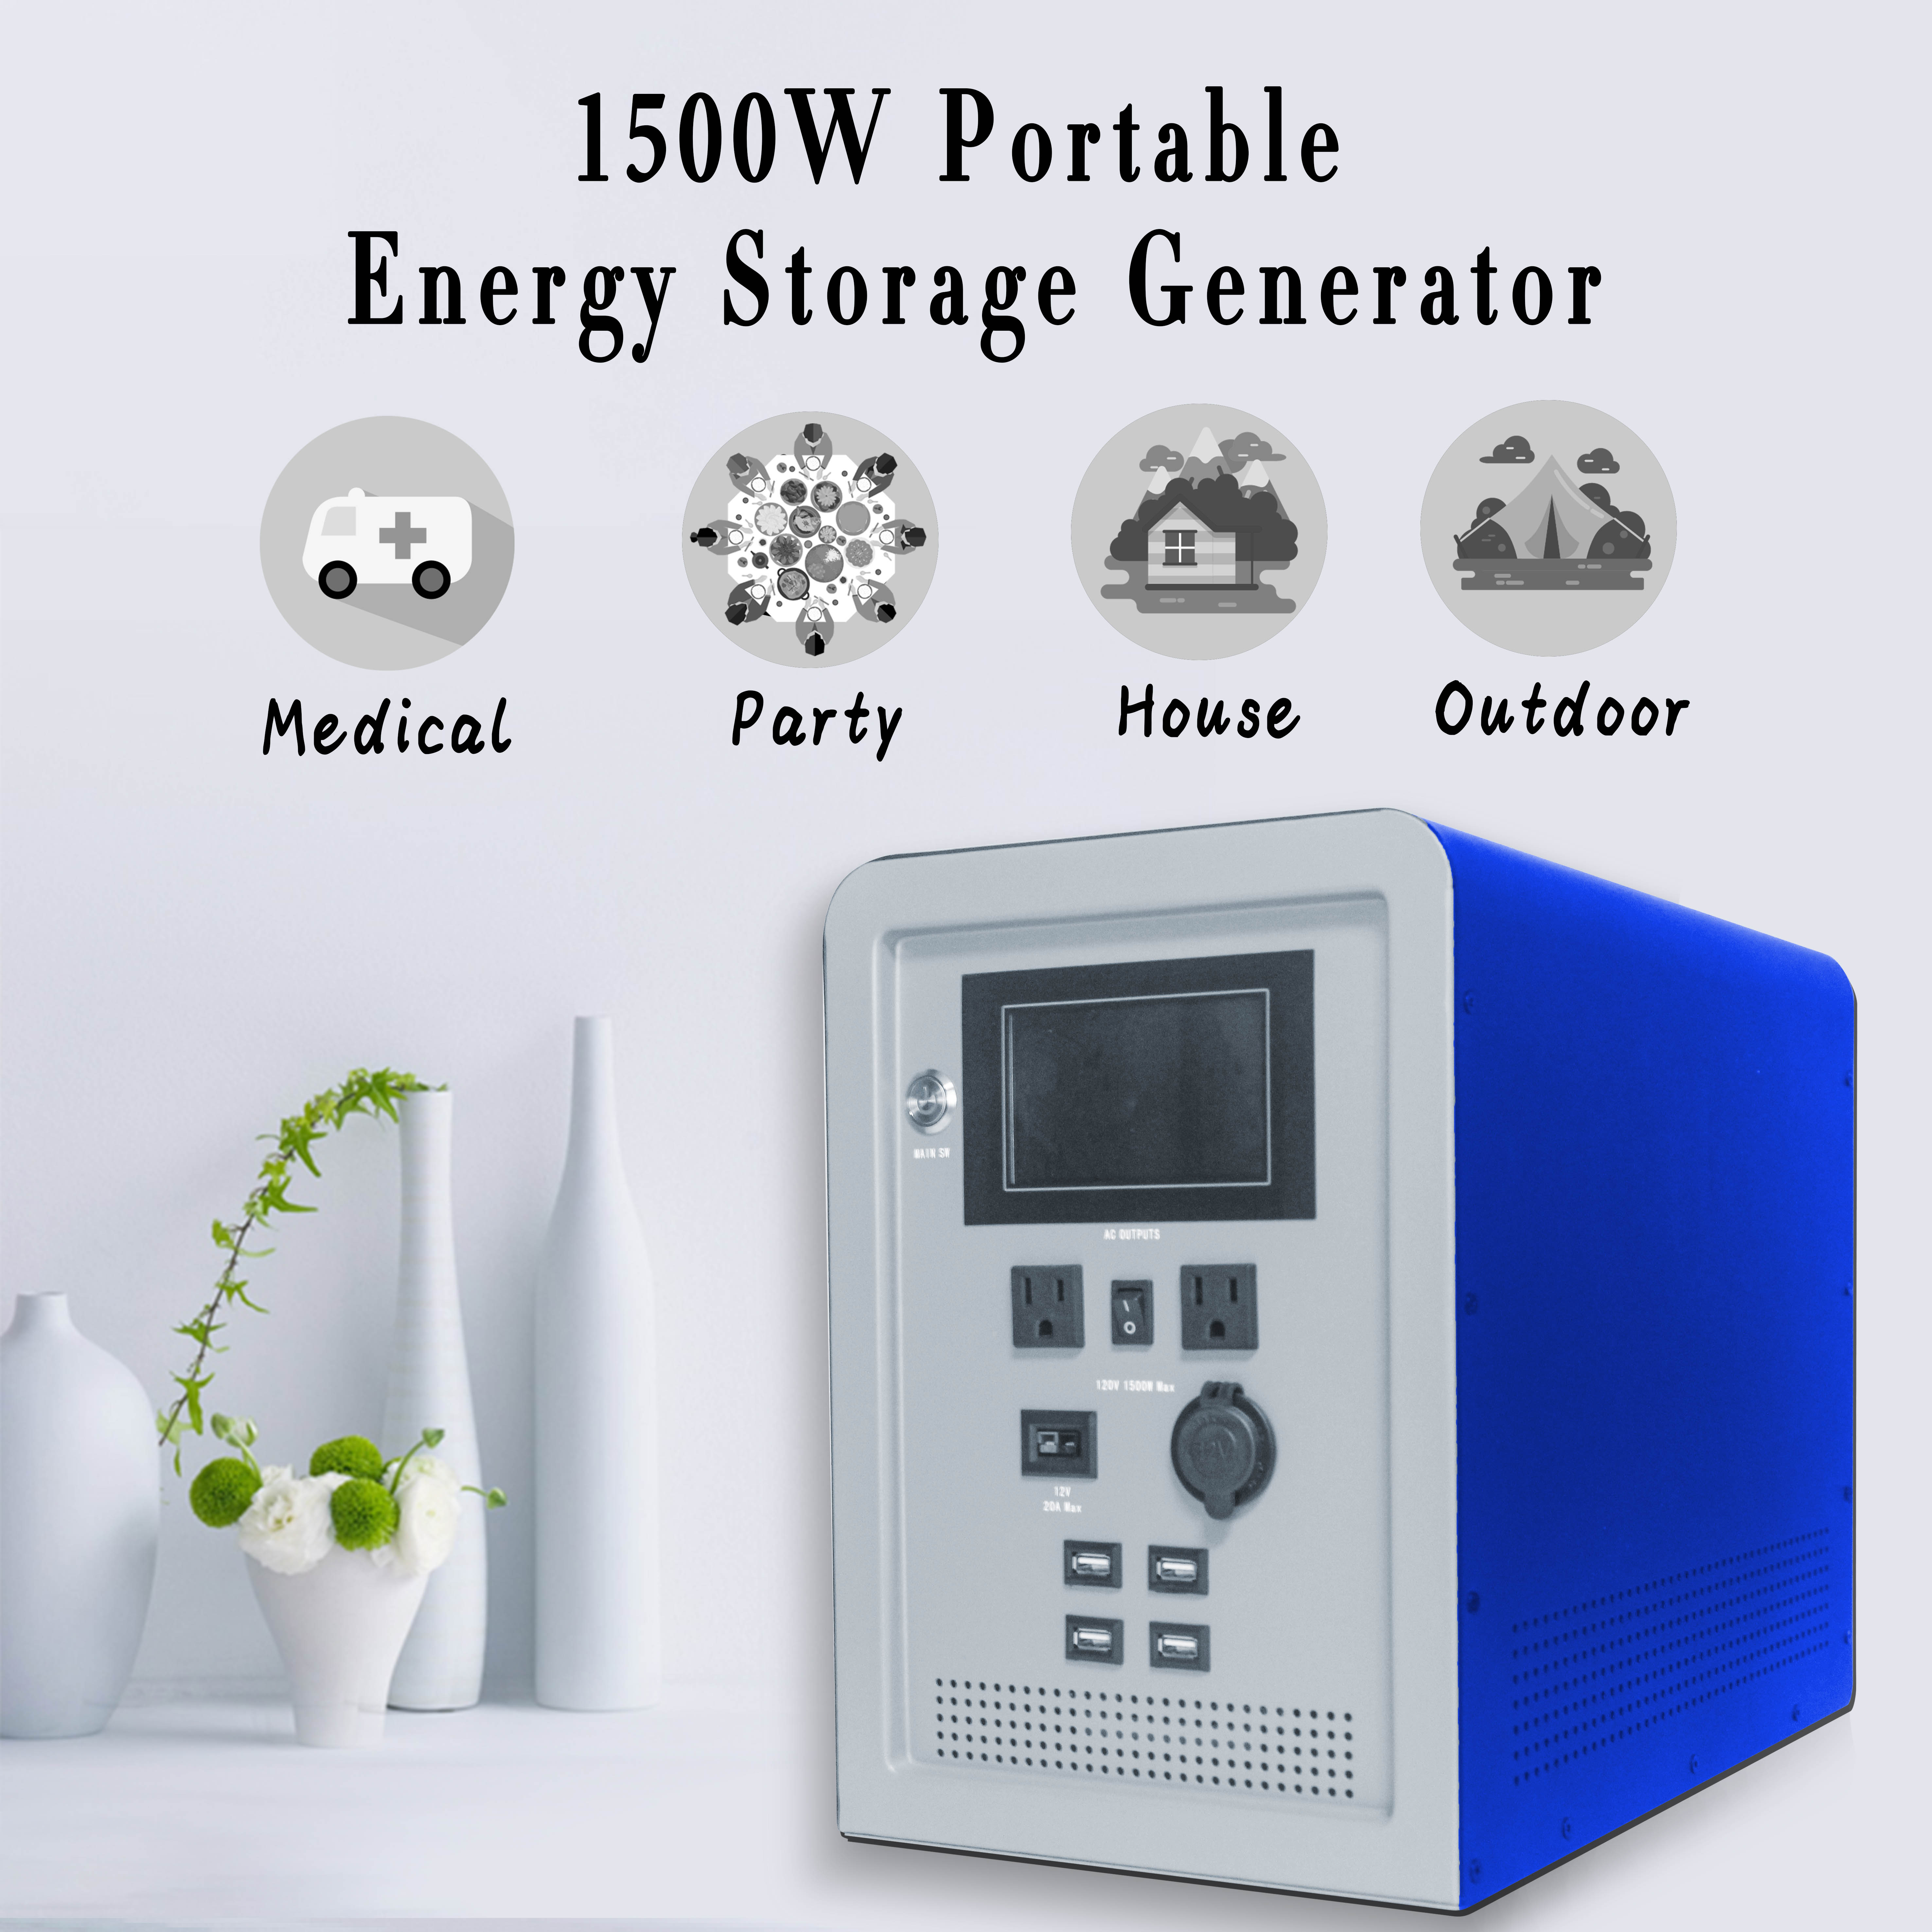 1500W Portable Energy Storage Generator